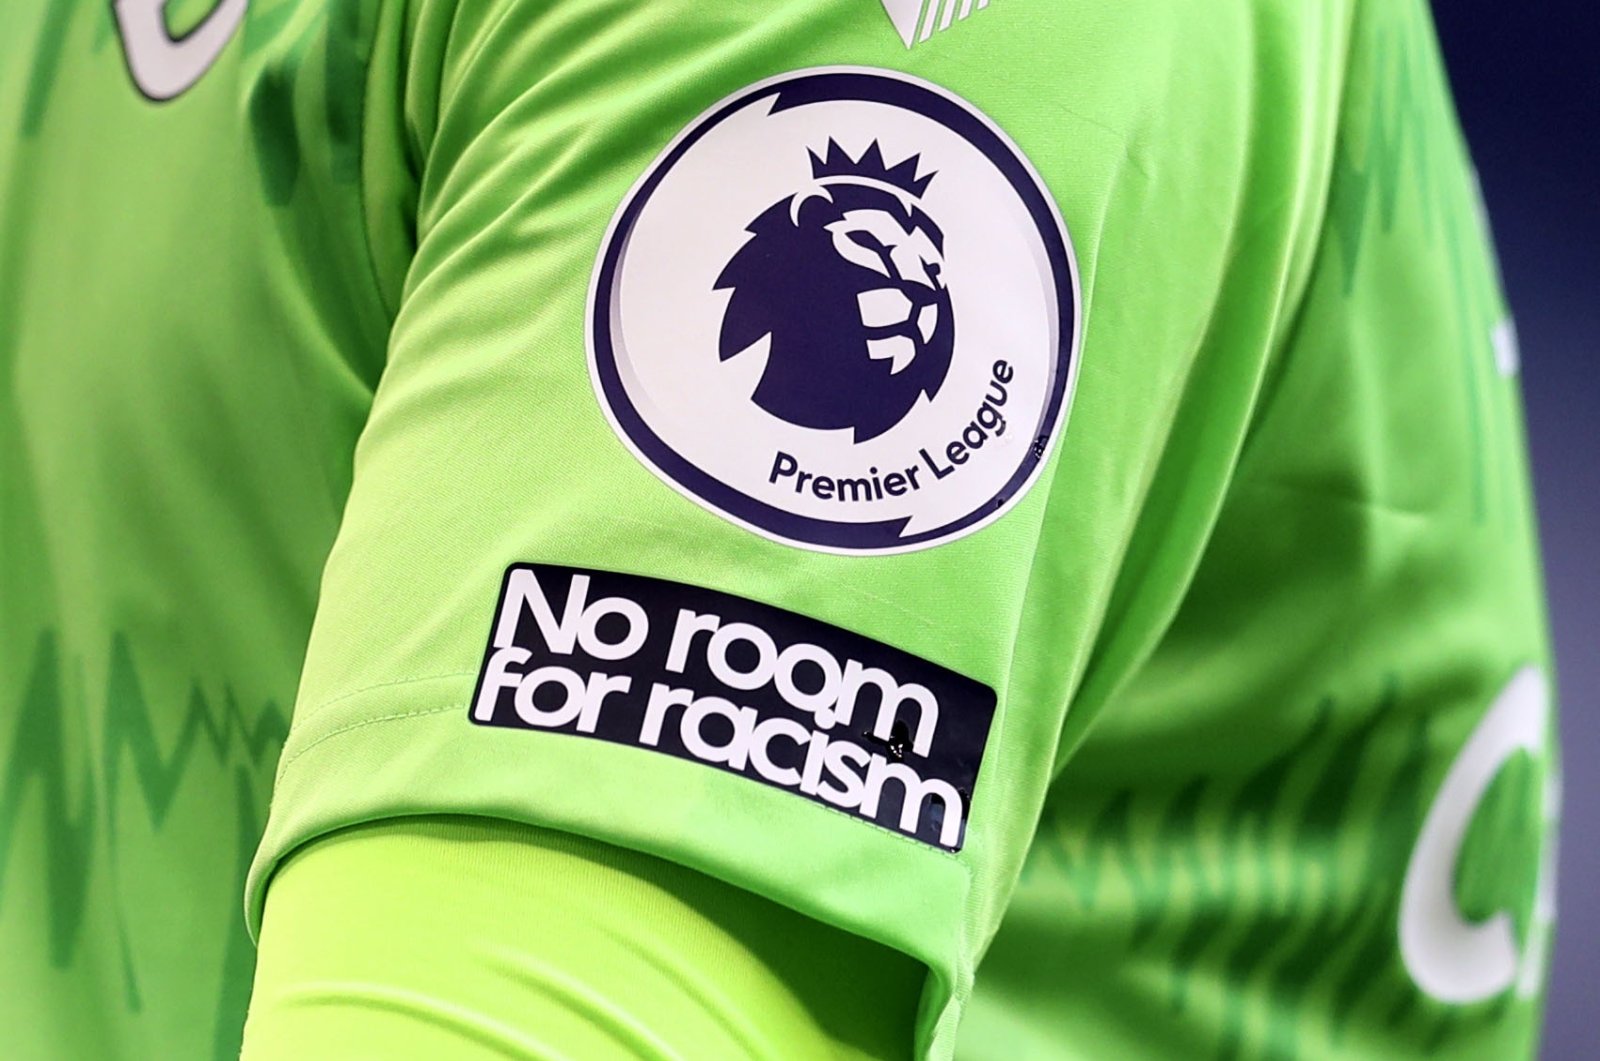 The "No Room For Racism" logo on Everton goalkeeper Jordan Pickford's shirt during a Premier League match against Tottenham Hotspur, London, England, Sept. 13, 2020. (AP Photo)